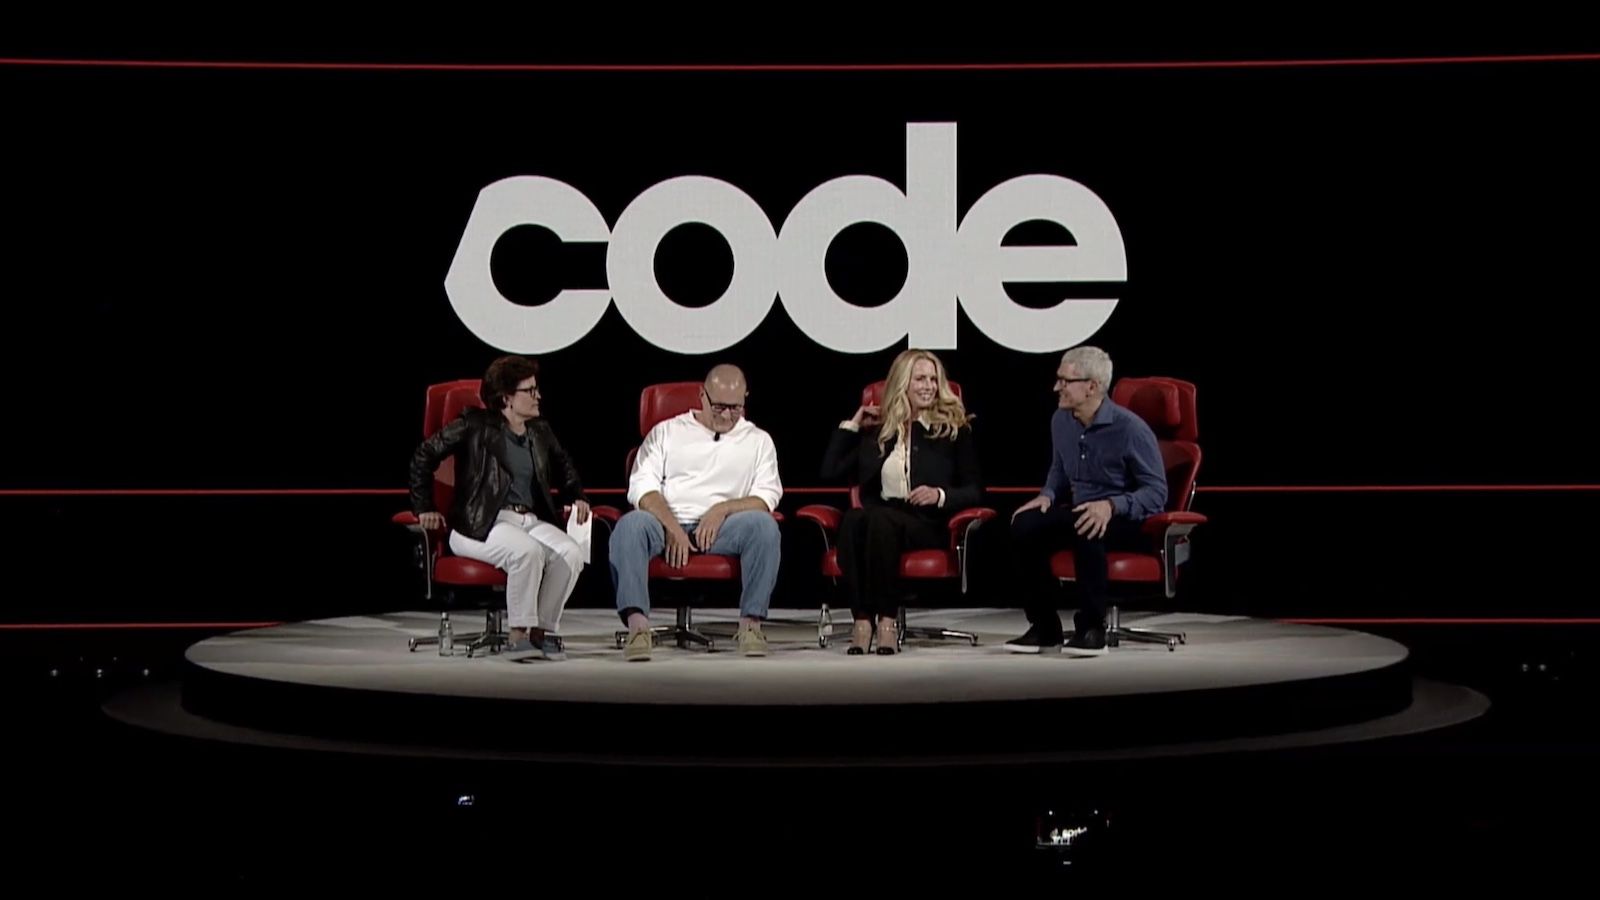 Full Video of Tim Cook, Jony Ive, and Laurene Powell Jobs Discussing Steve Jobs ..